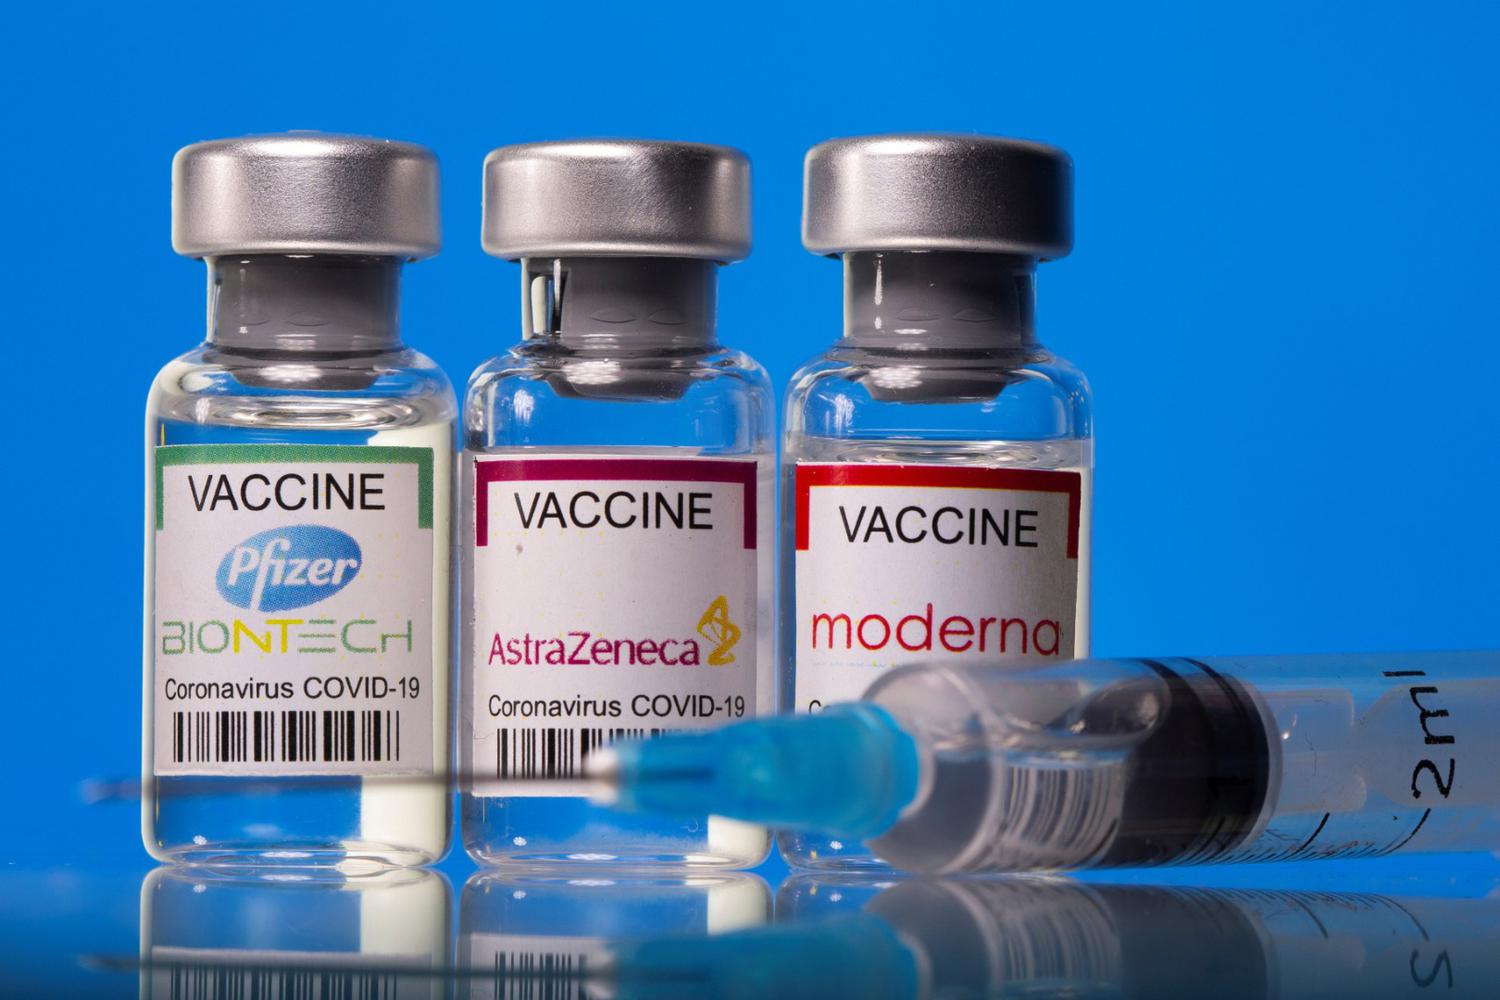 Menkes: Stok Vaksin Indonesia Tersisa 50 Juta Dosis